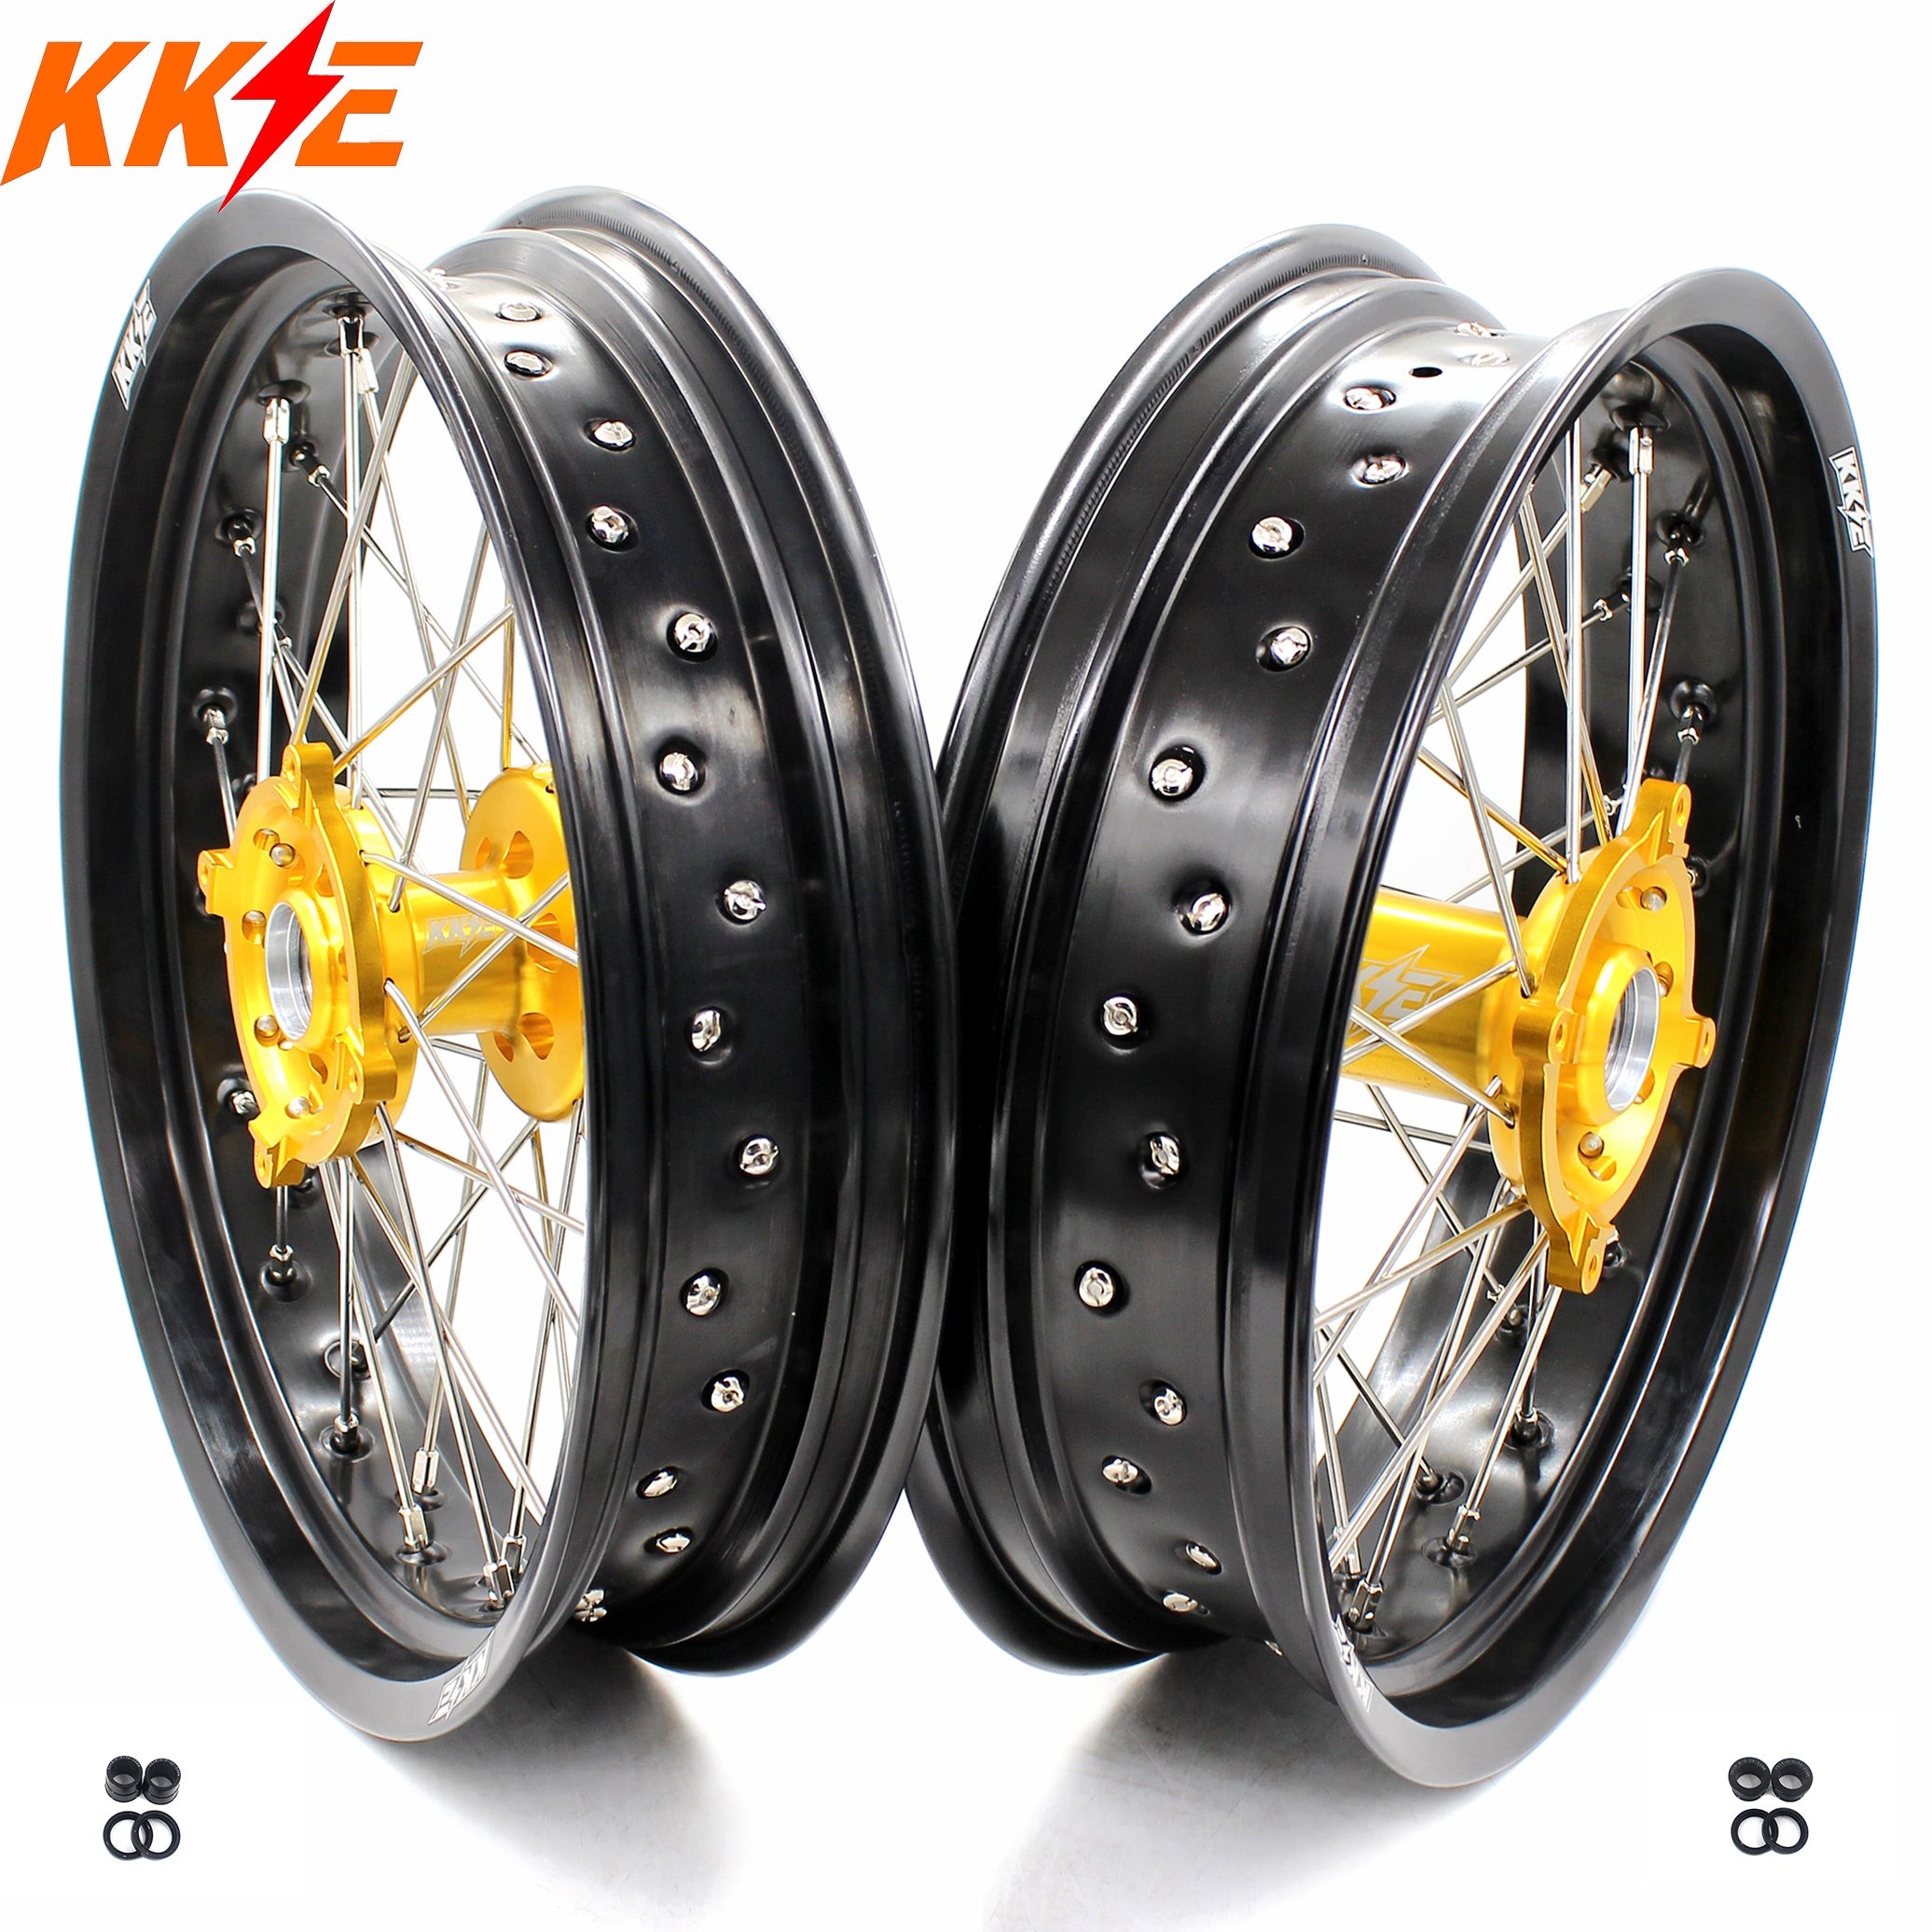 SM Wheels For RMZ Series – KKE Racing